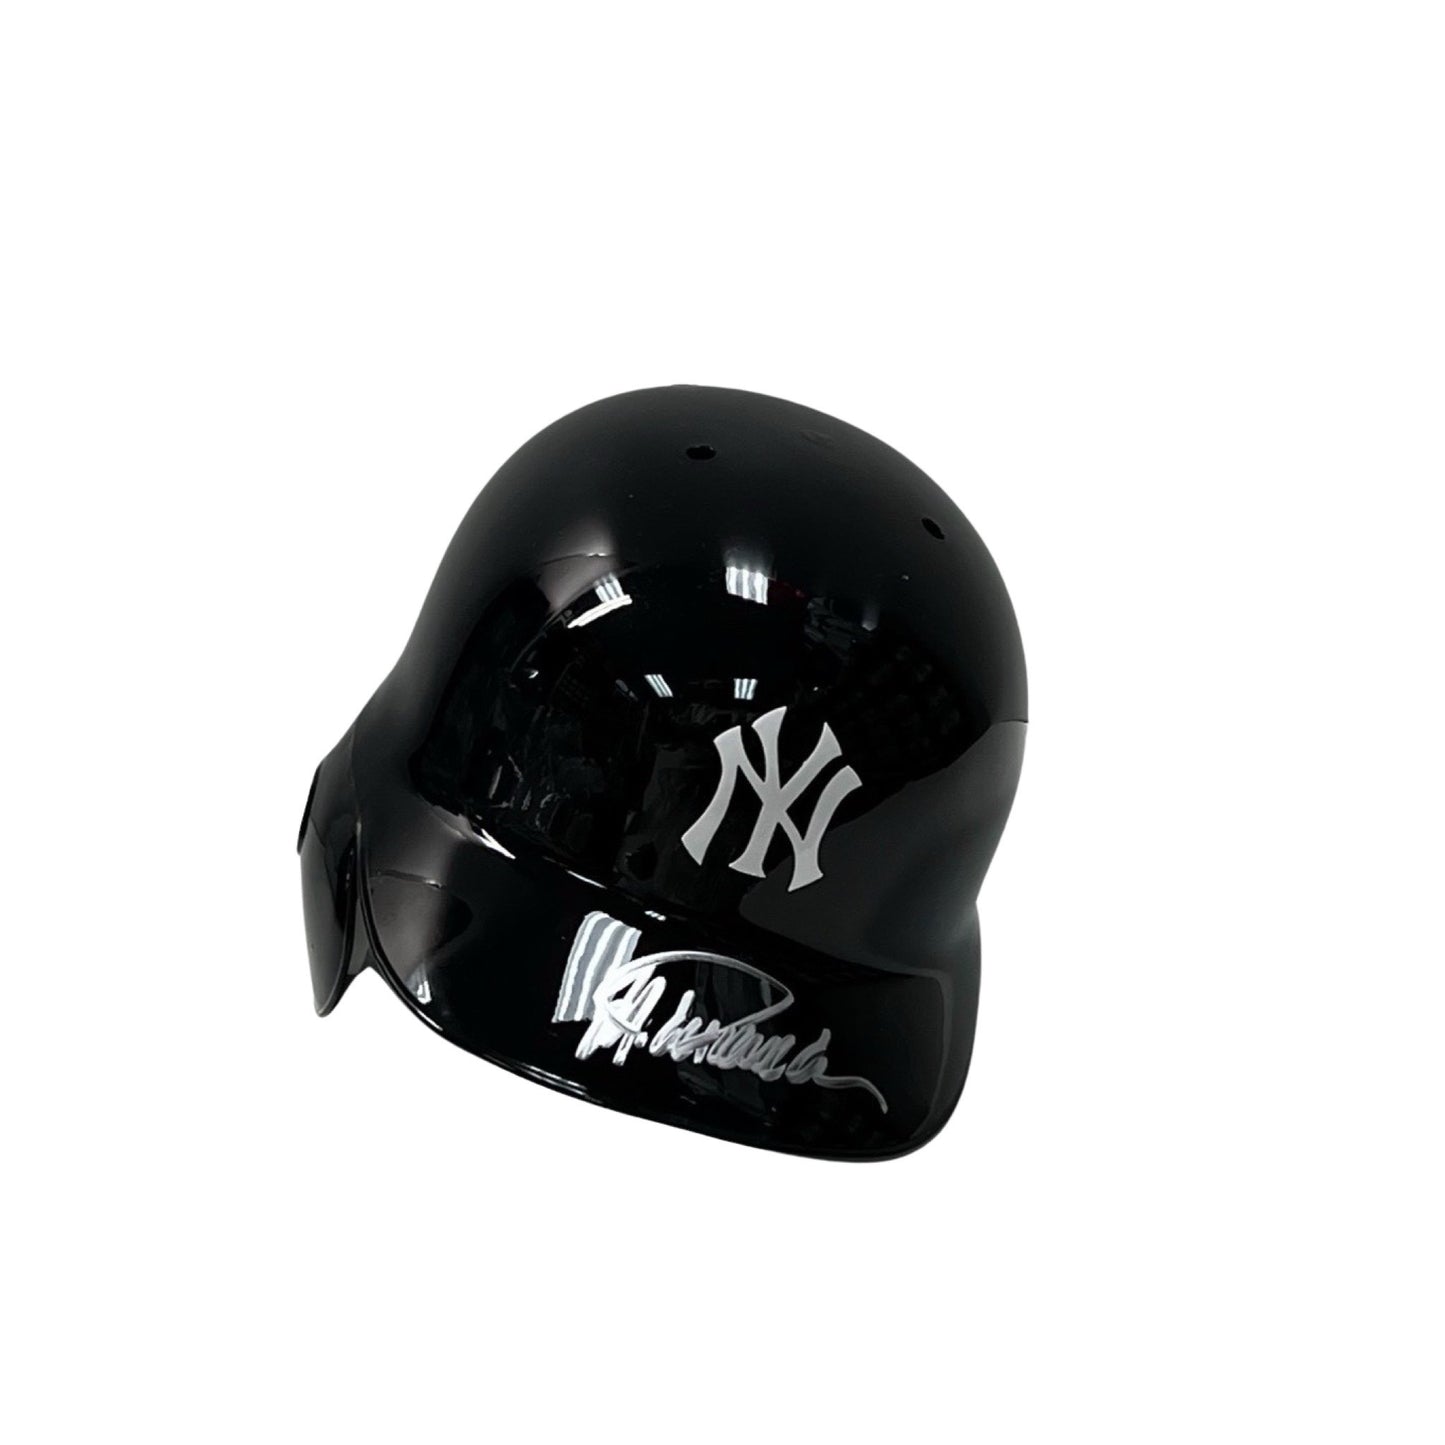 Jorge Posada Autographed New York Yankees Batting Helmet Steiner CX